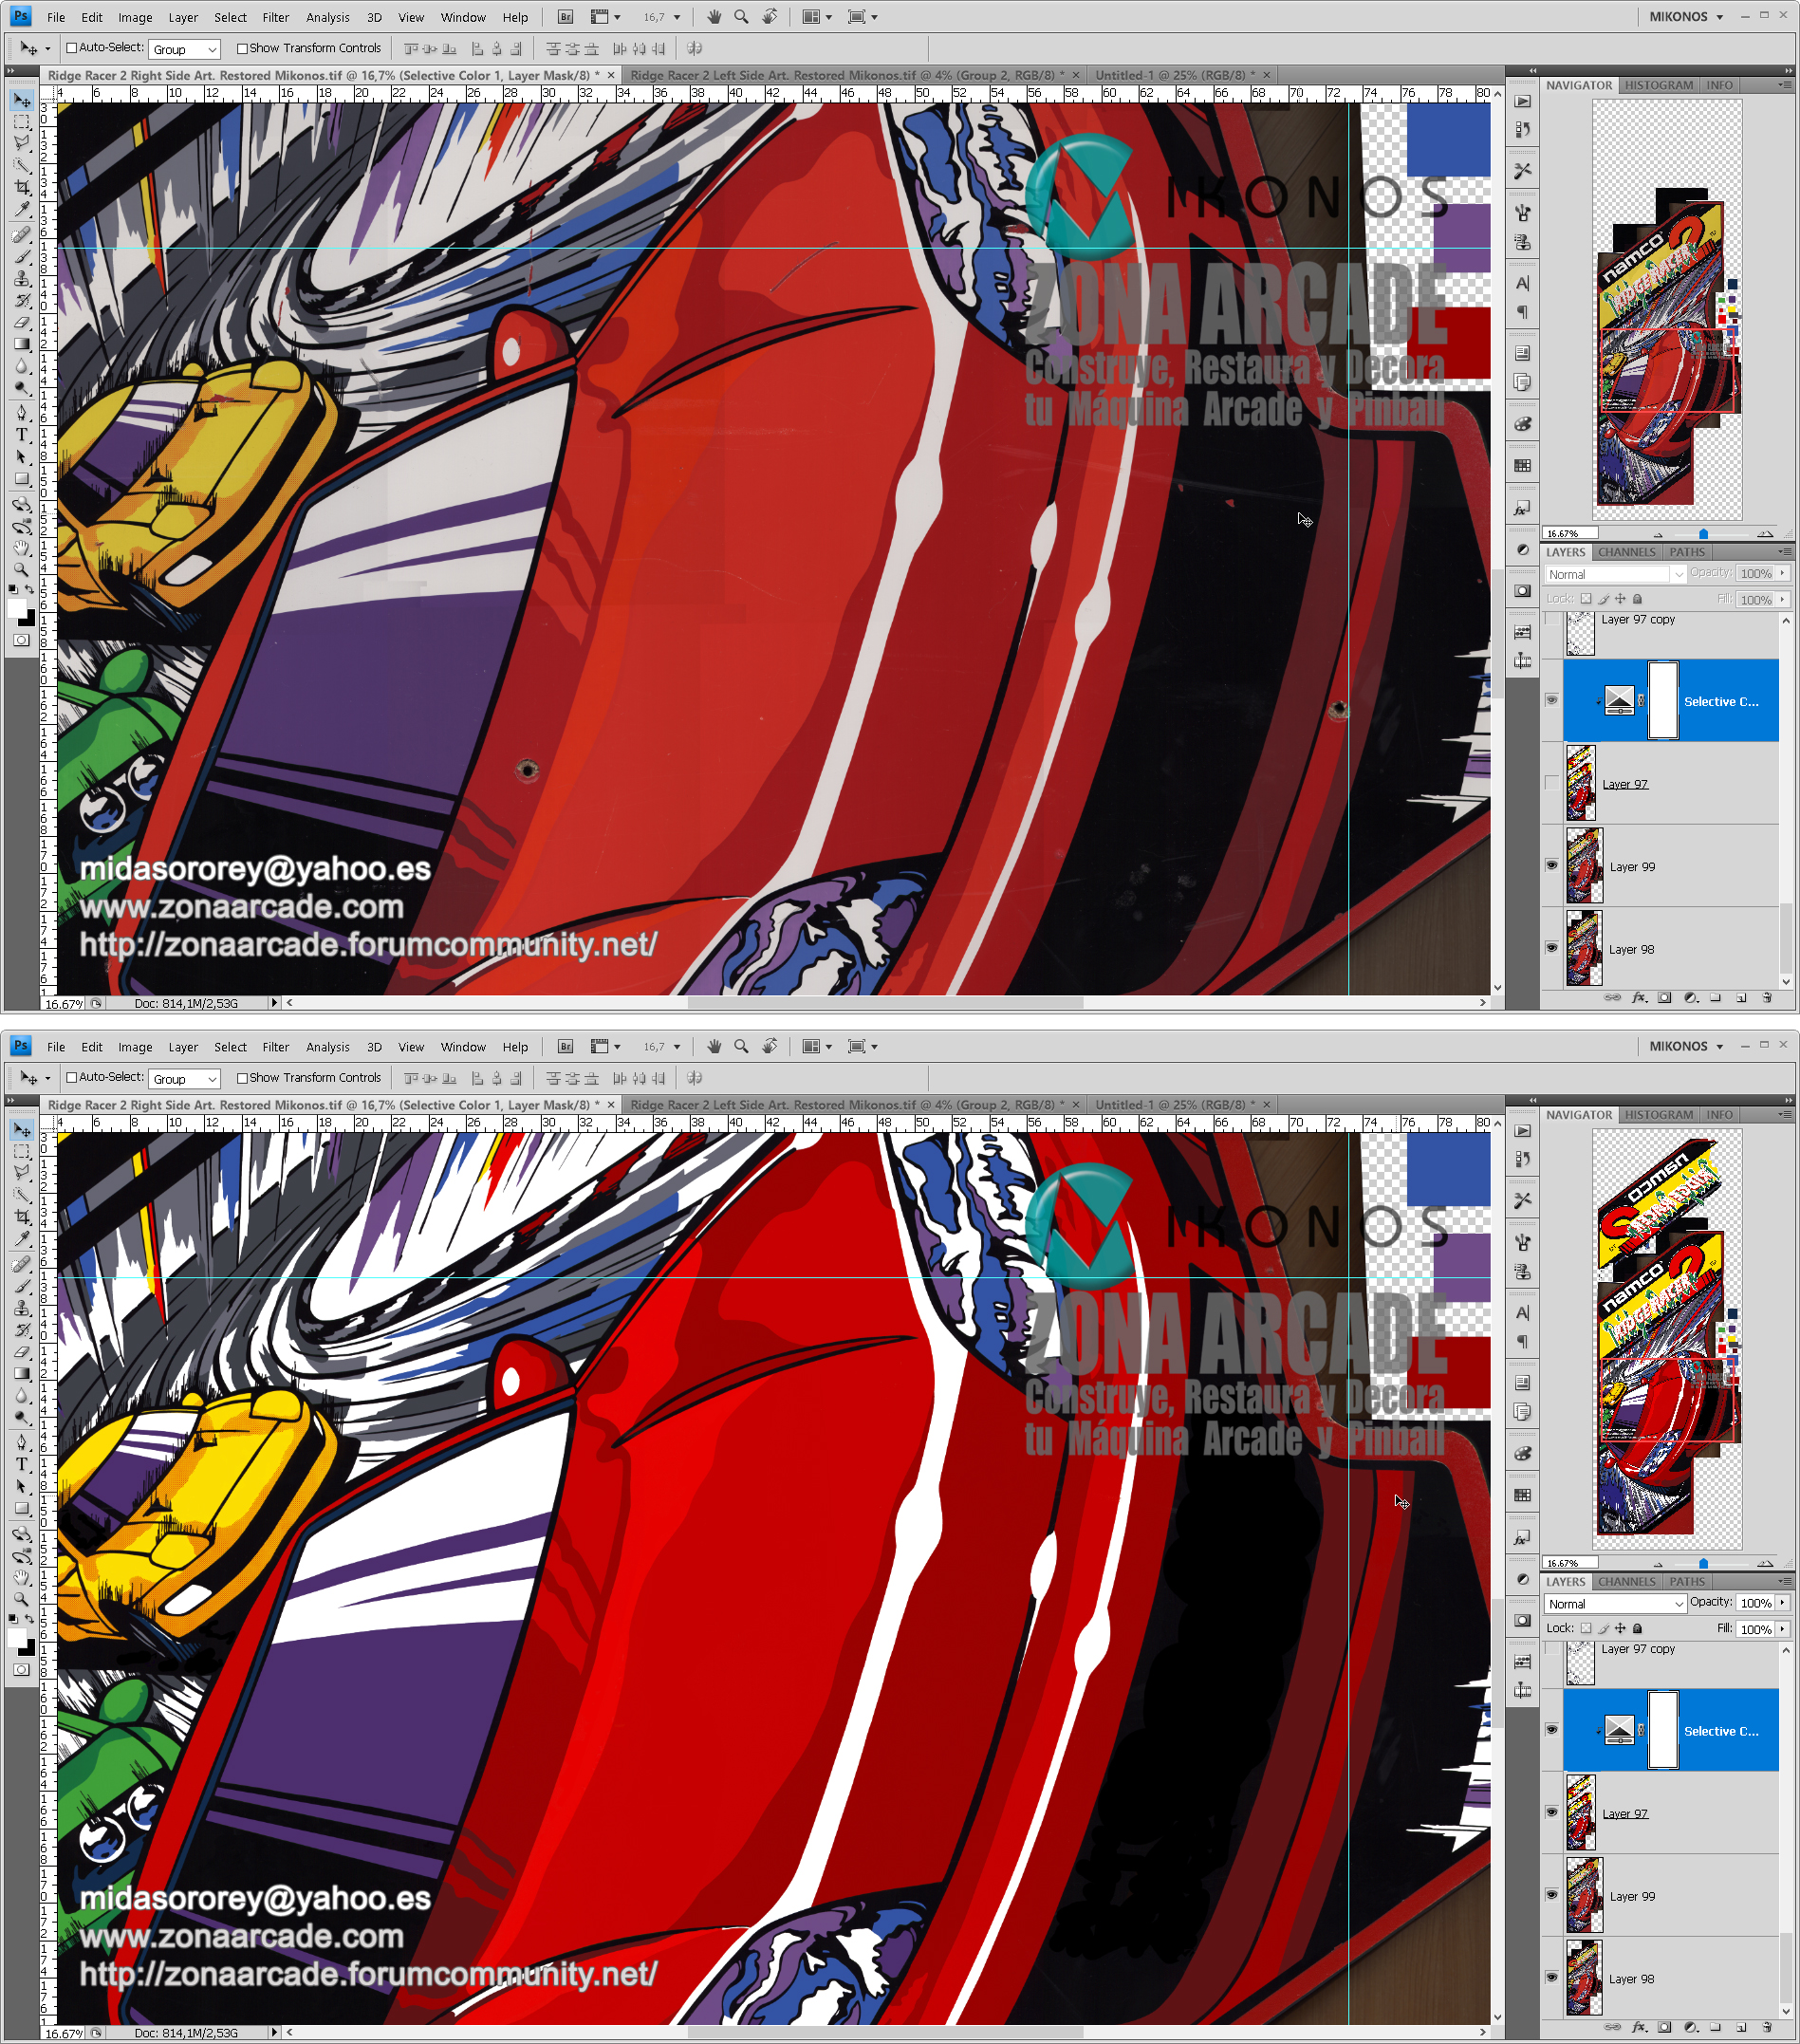 Ridge Racer 2 Left Side Art. In restoration Mikonos3